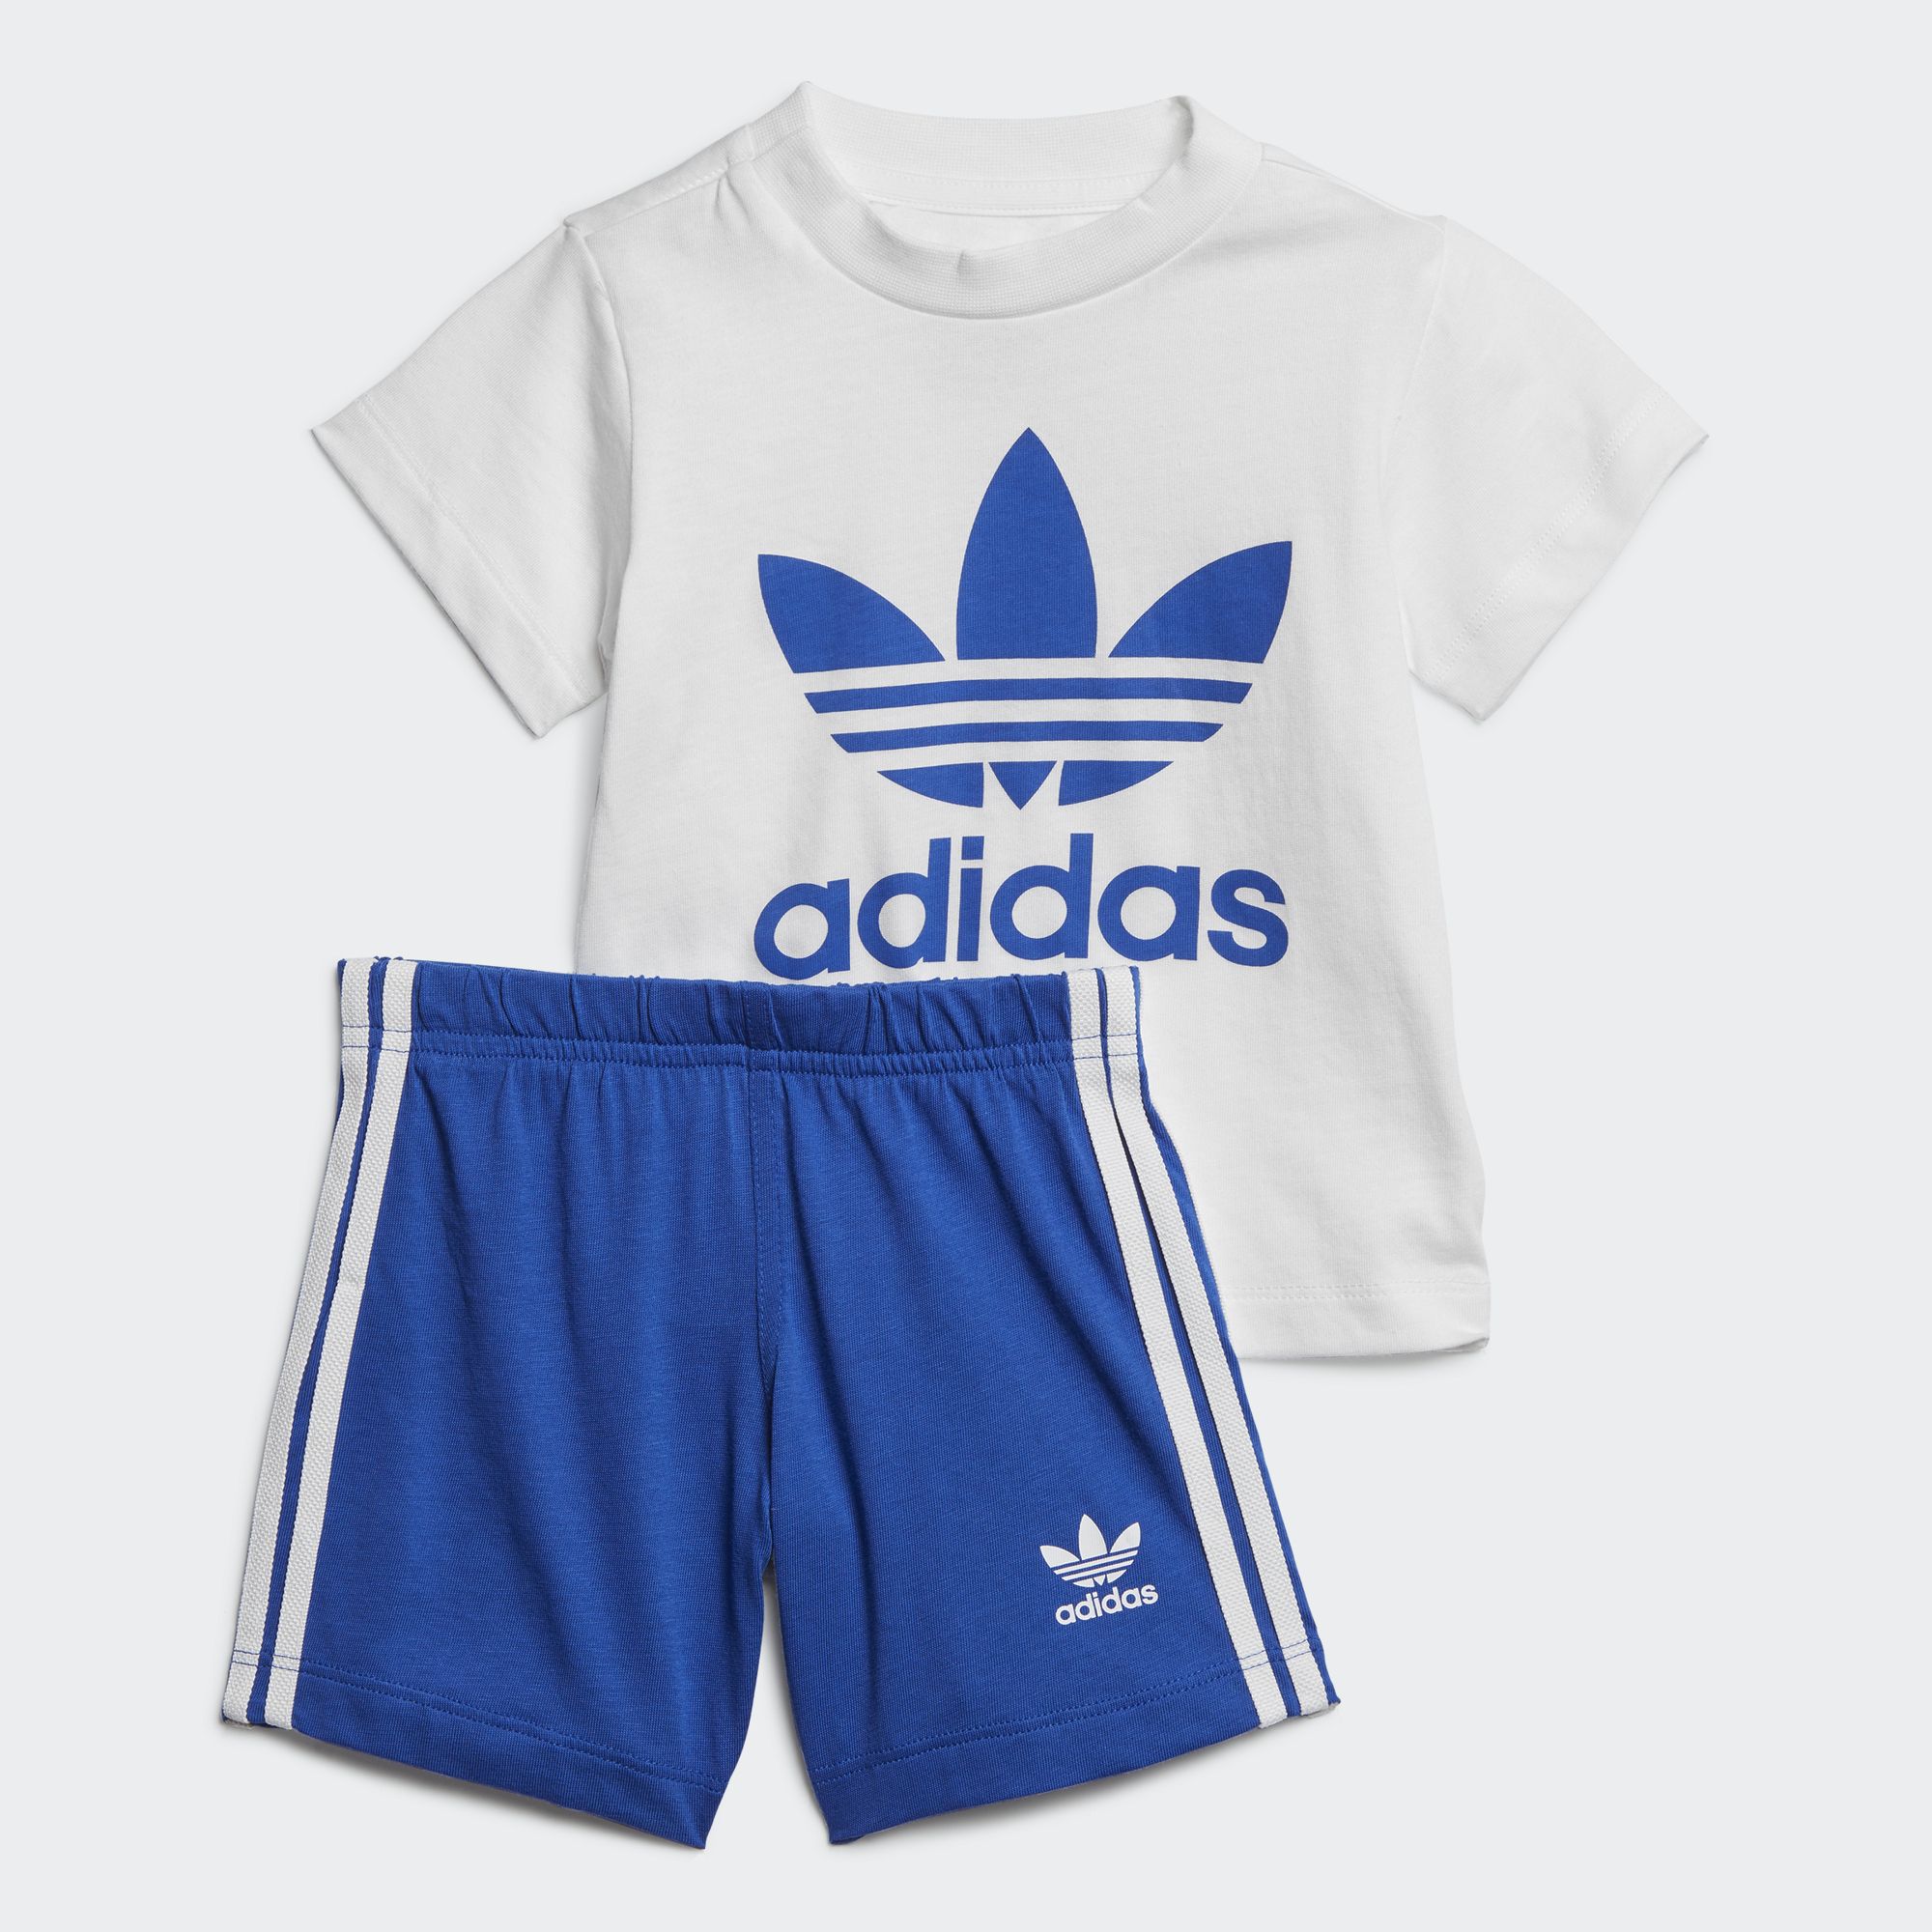 adidas ORIGINALS Trefoil Shorts Tee Set เด็กเล็กไม่ ระบุเพศ สีขาว GD2626